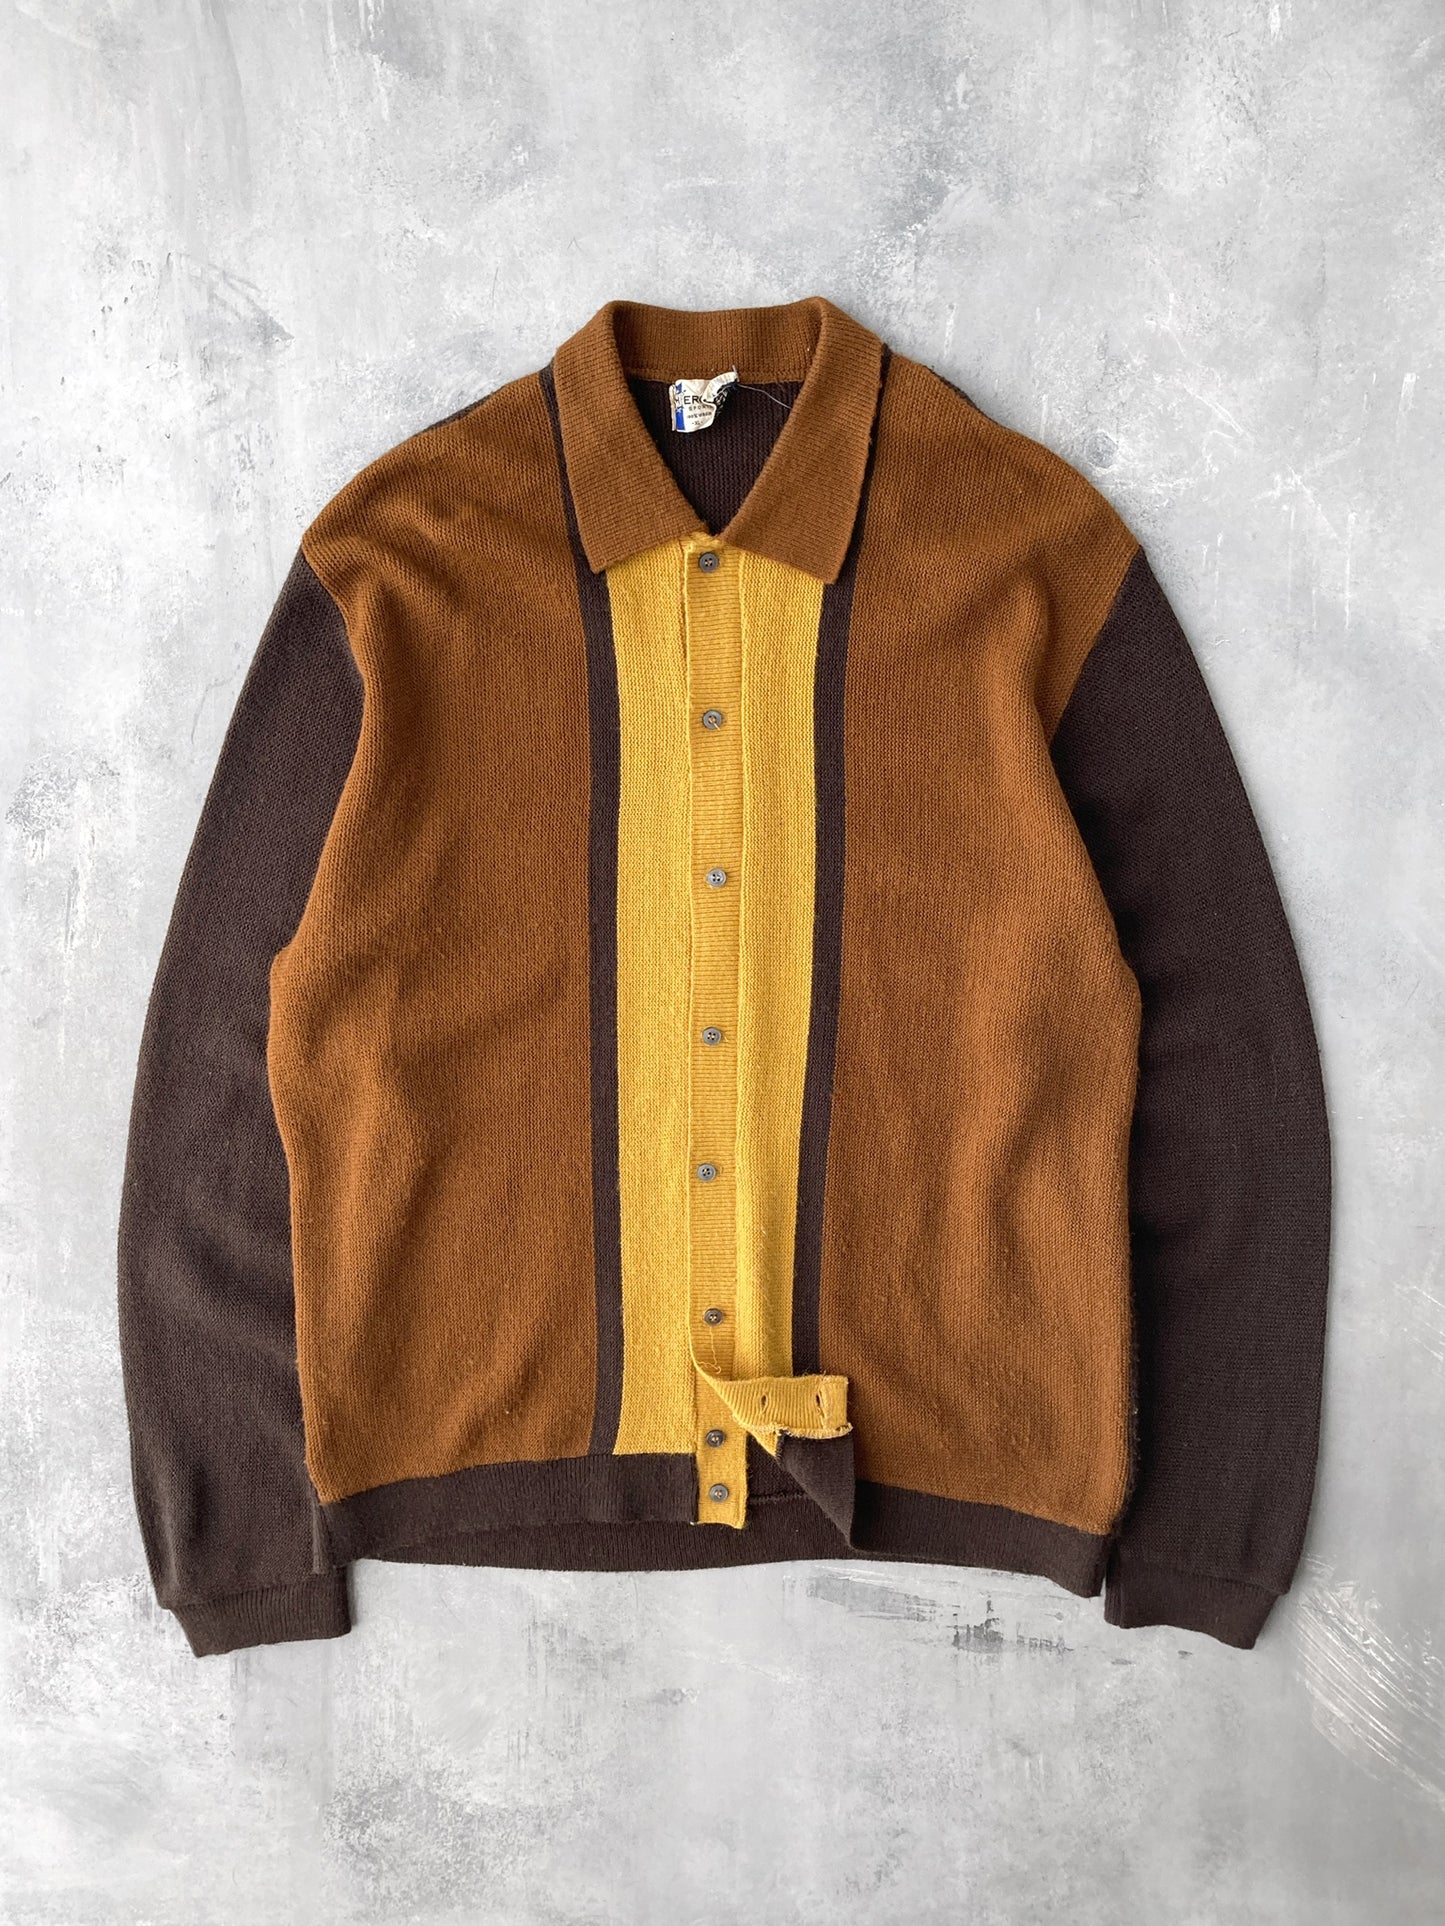 Collared Cardigan Sweater 60's - Large / XL